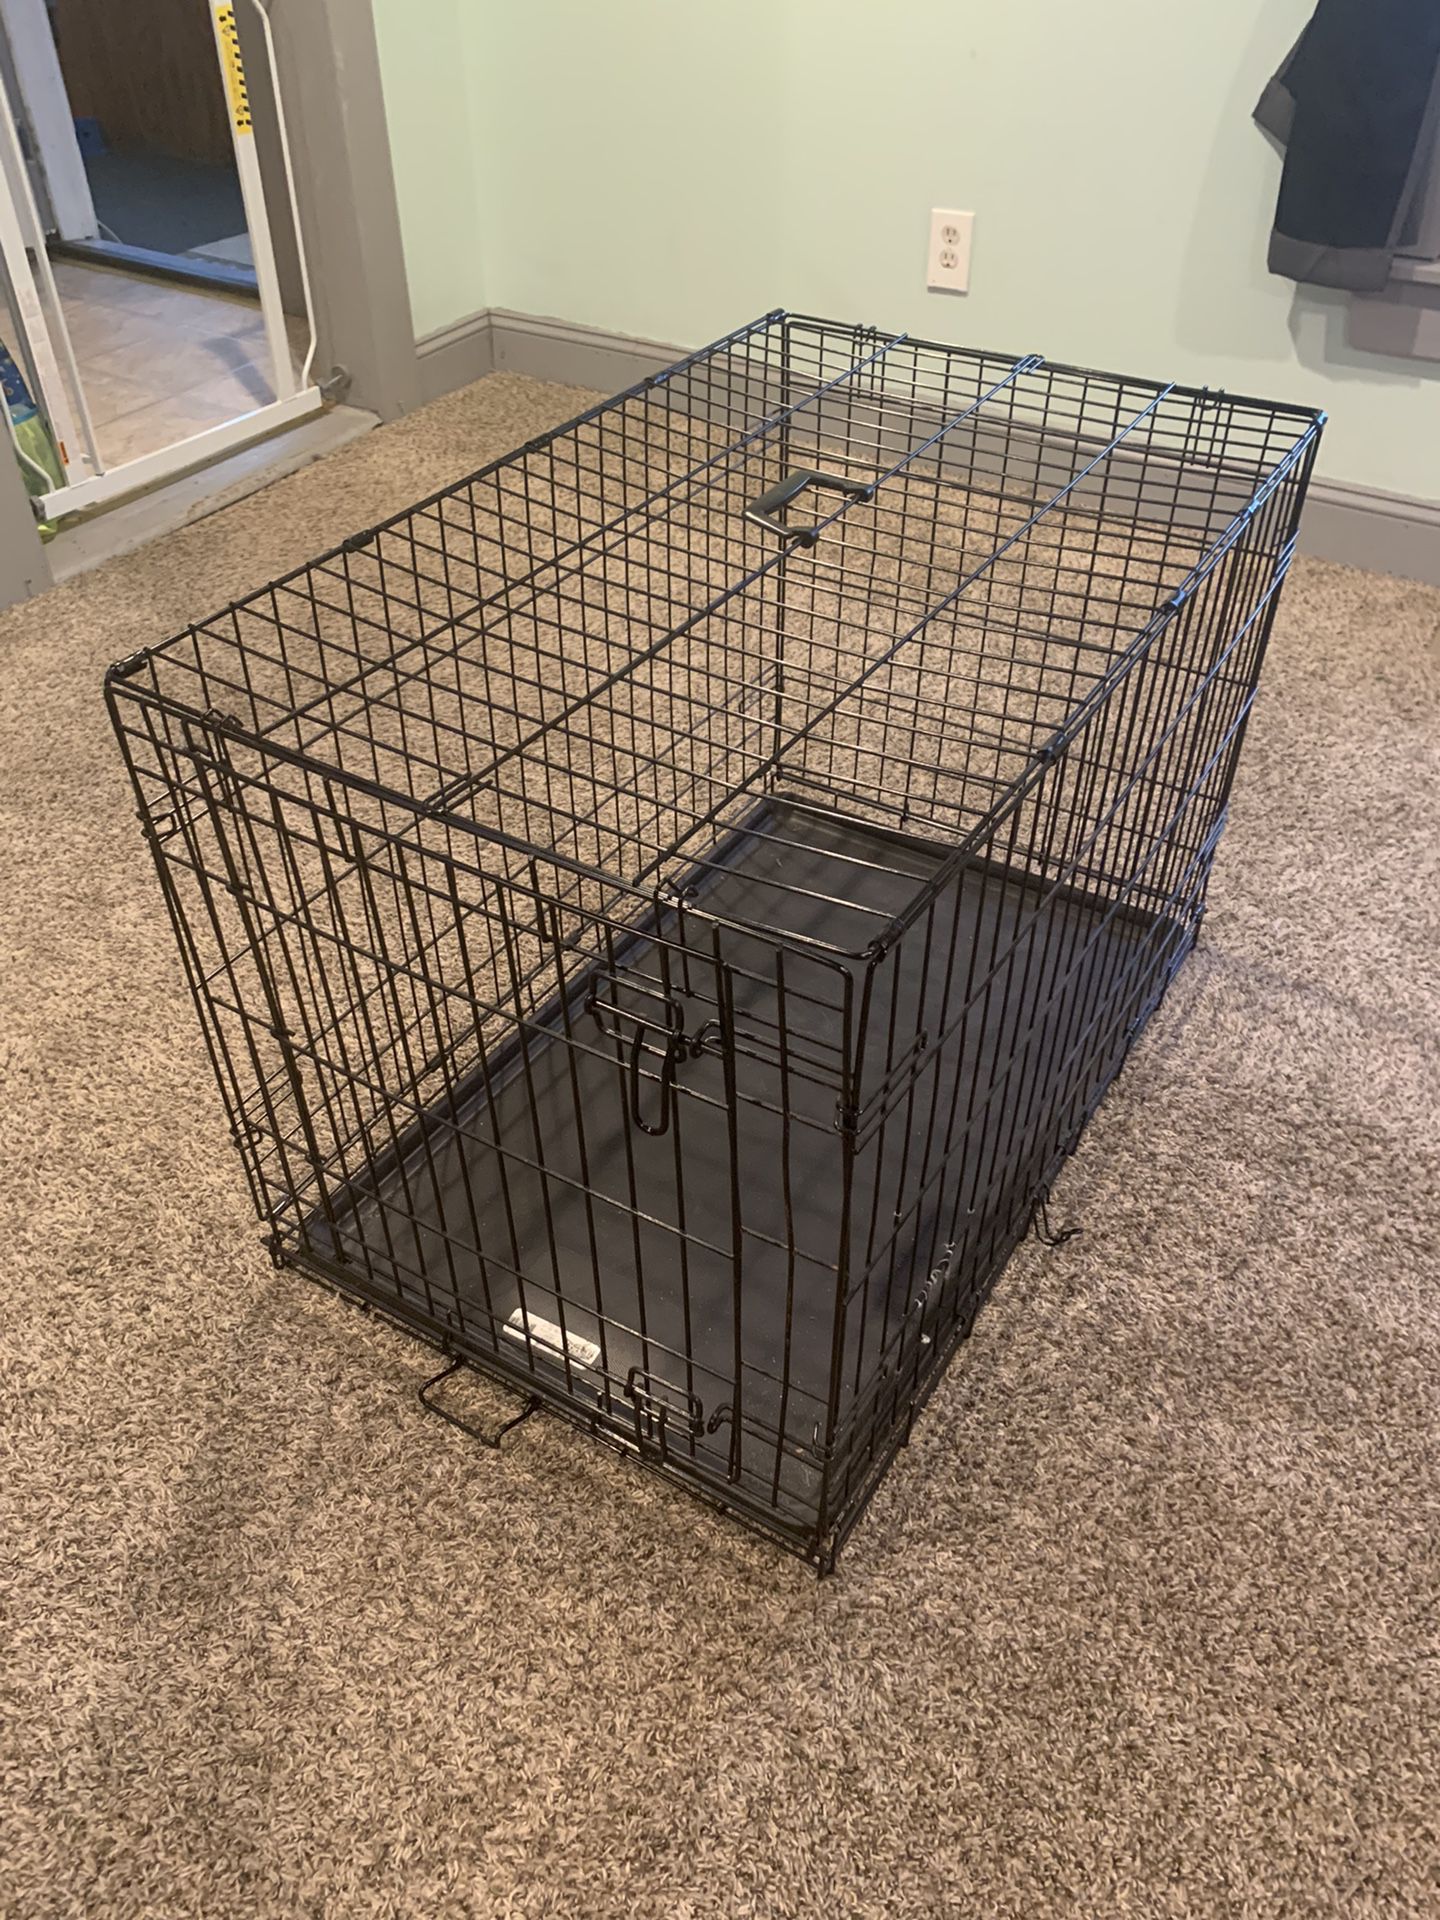 Medium Size Dog Crate